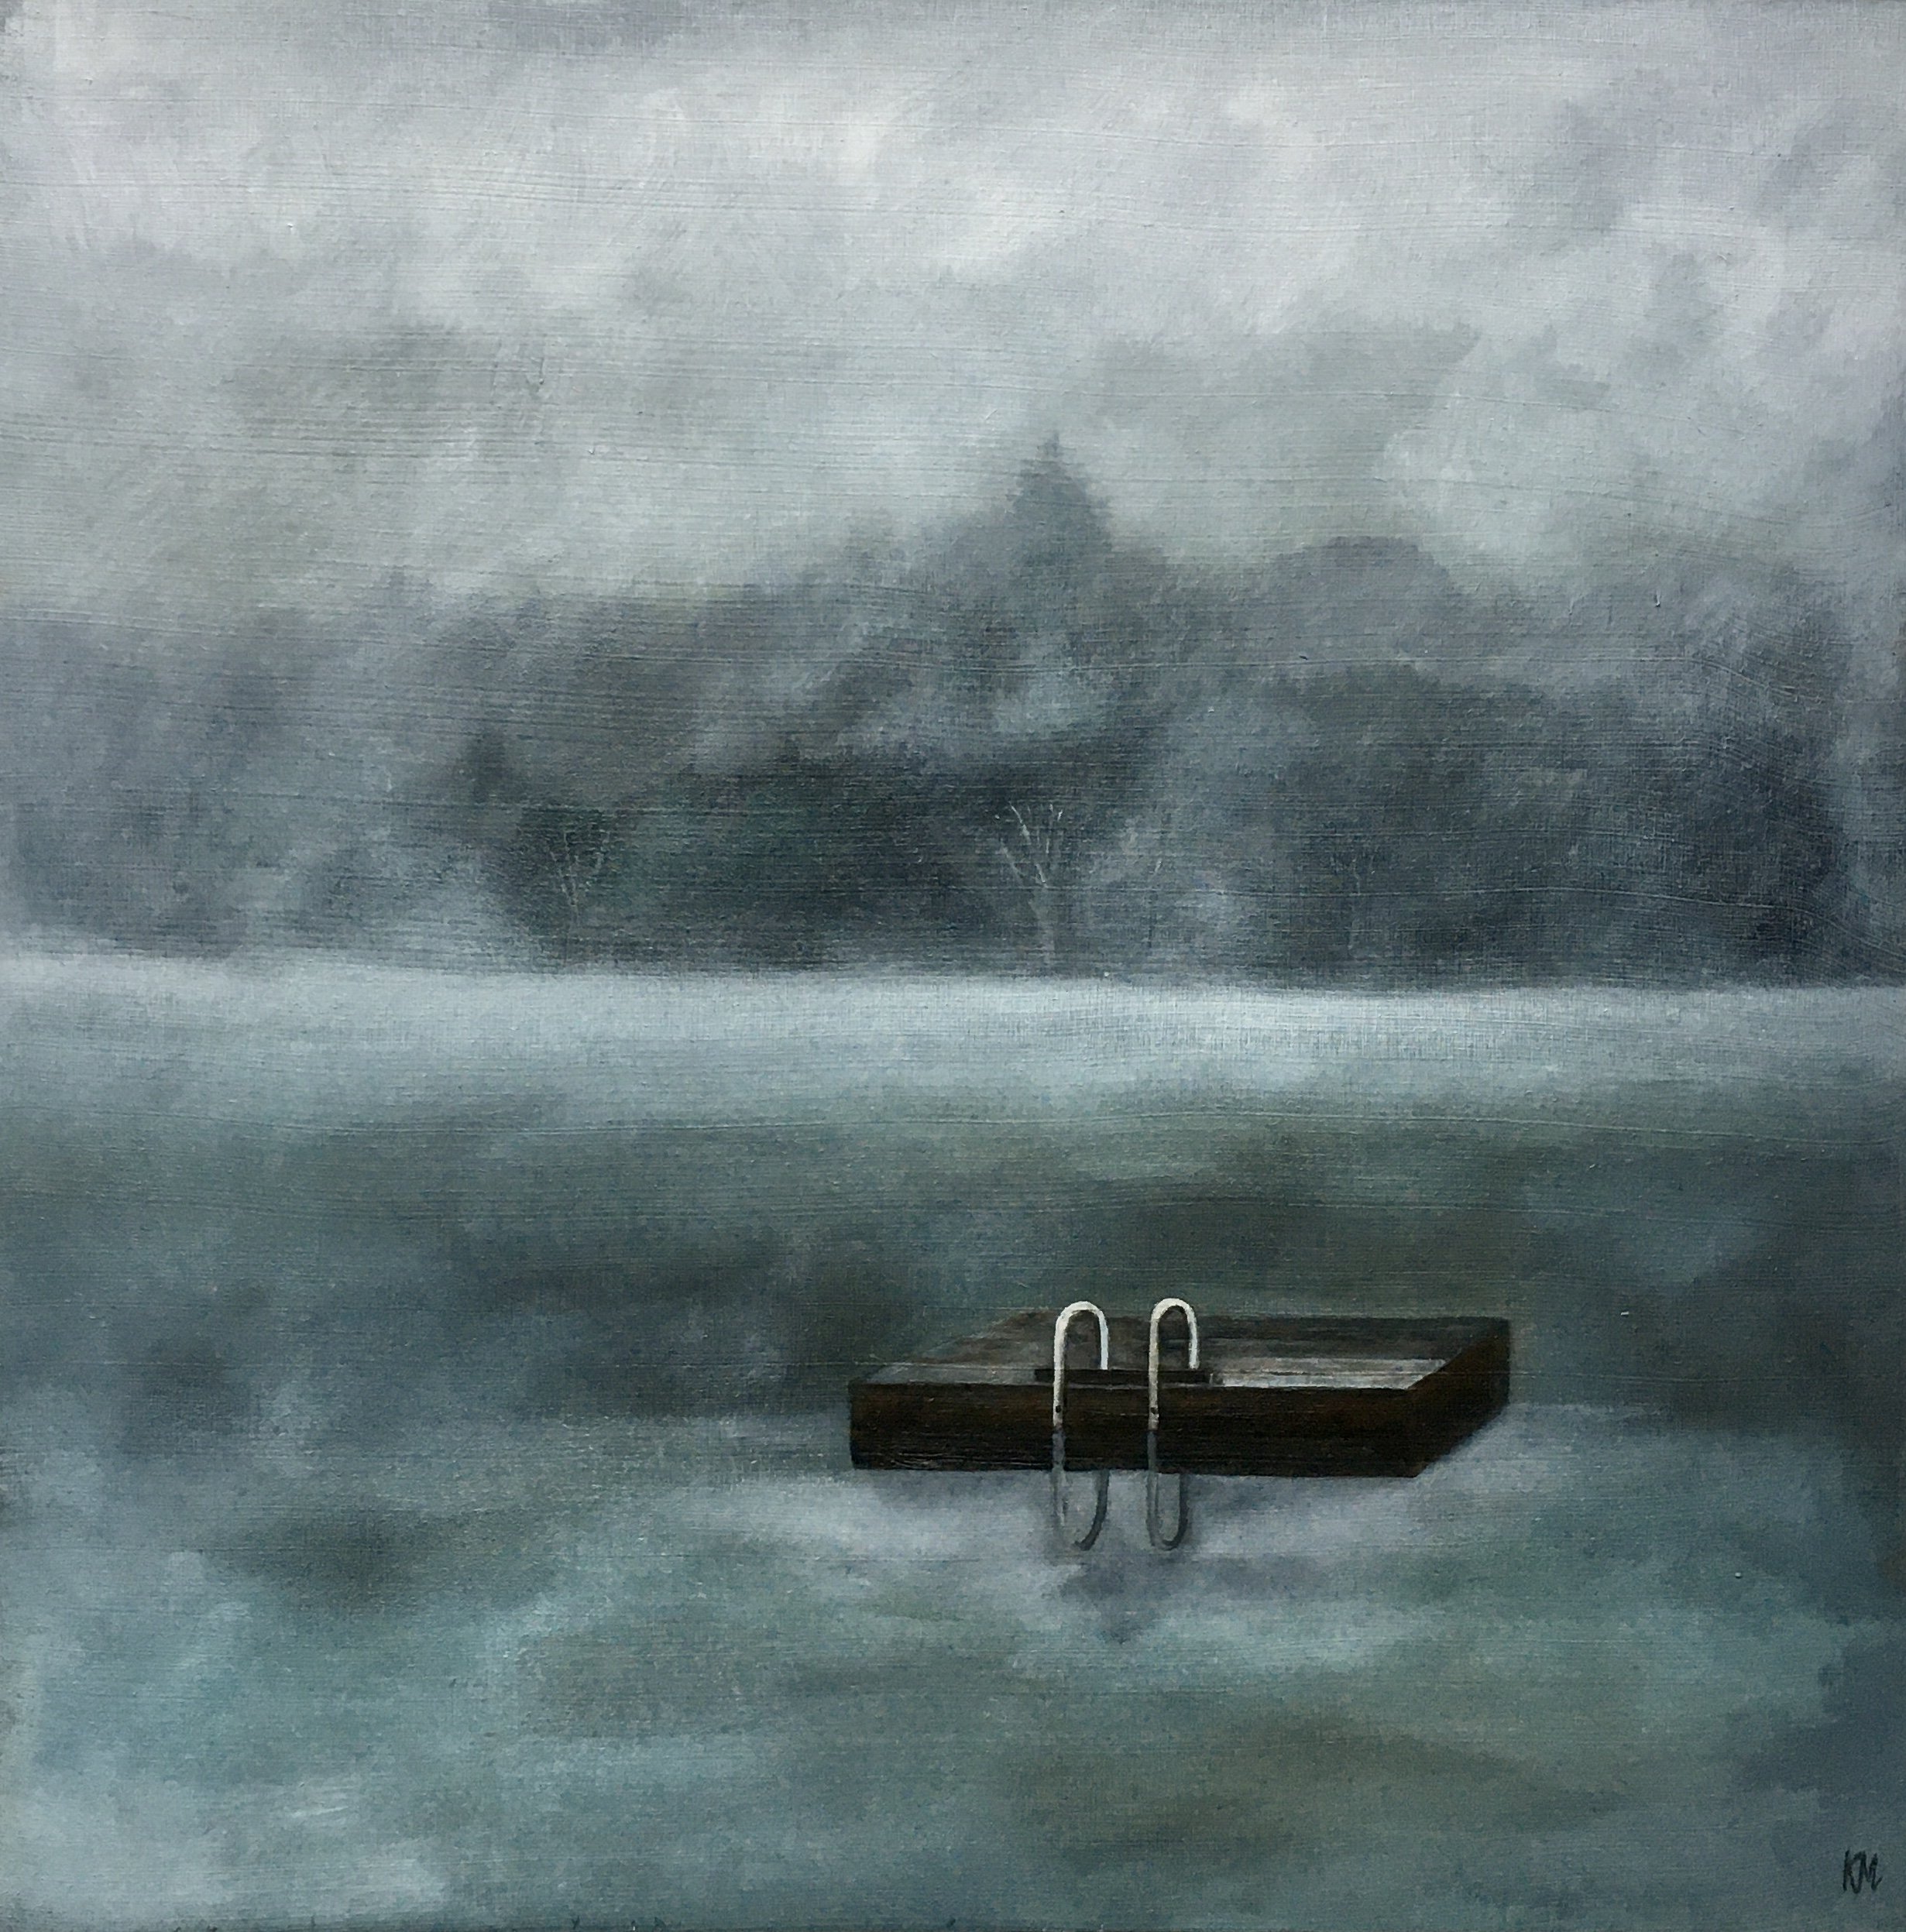 Dock in the Mist